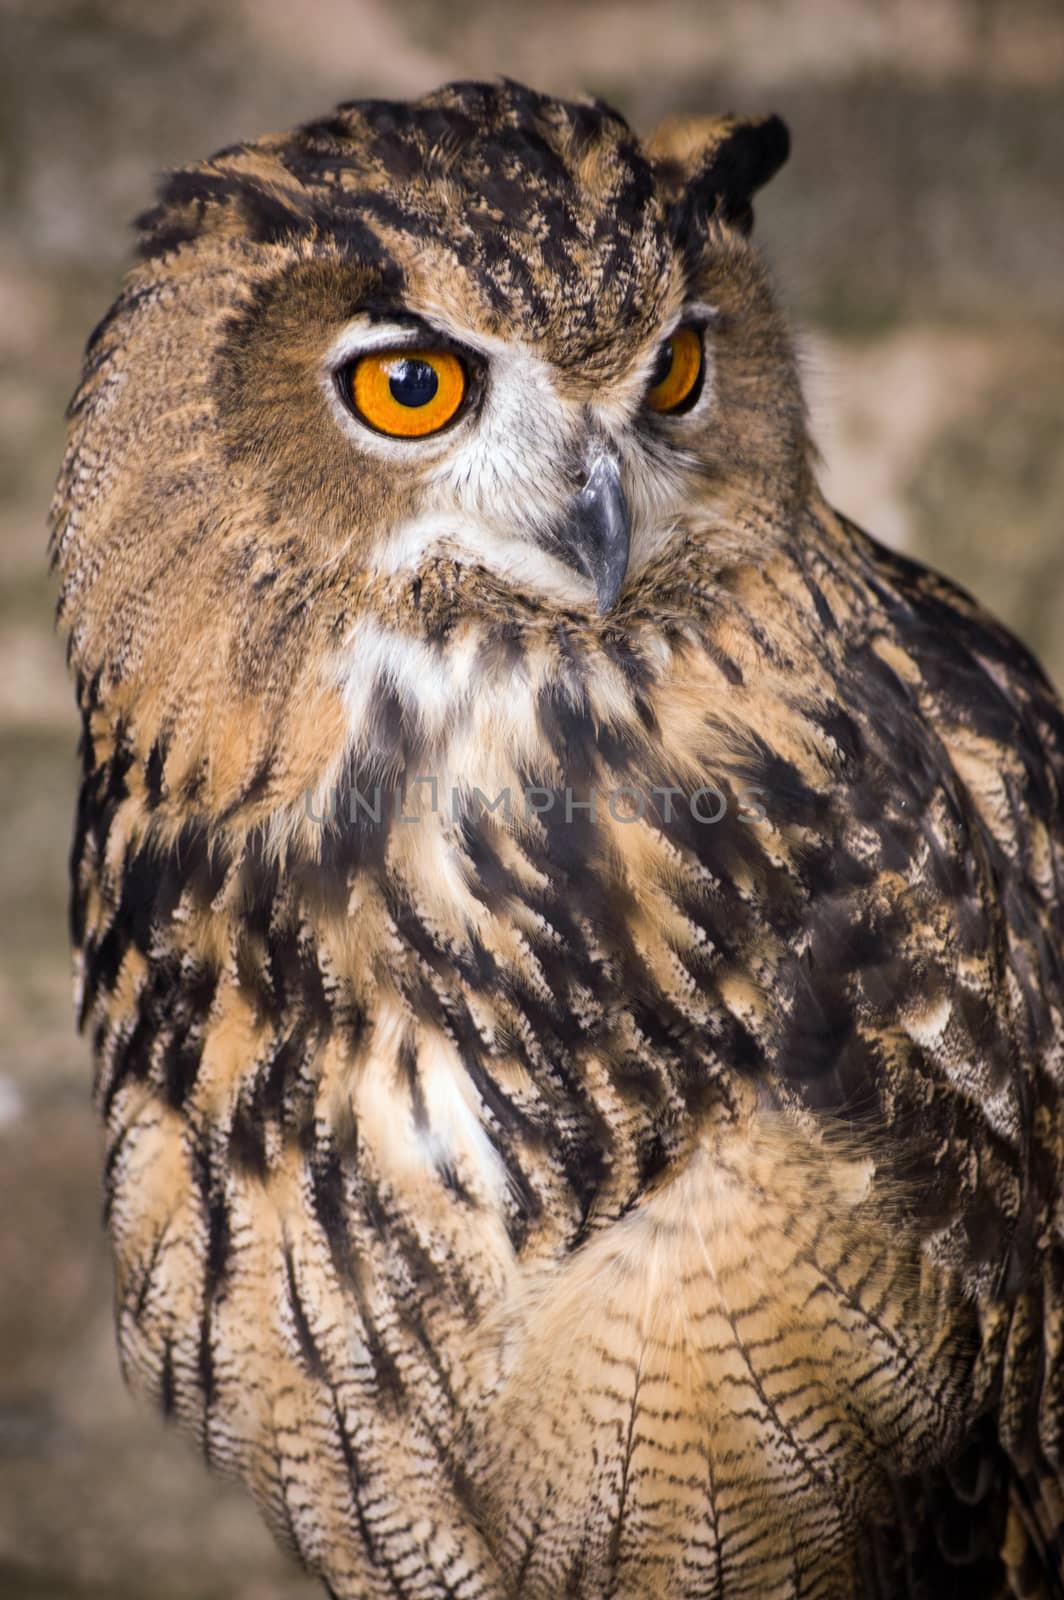 Eurasian Eagle Owl looking alert by BasPhoto